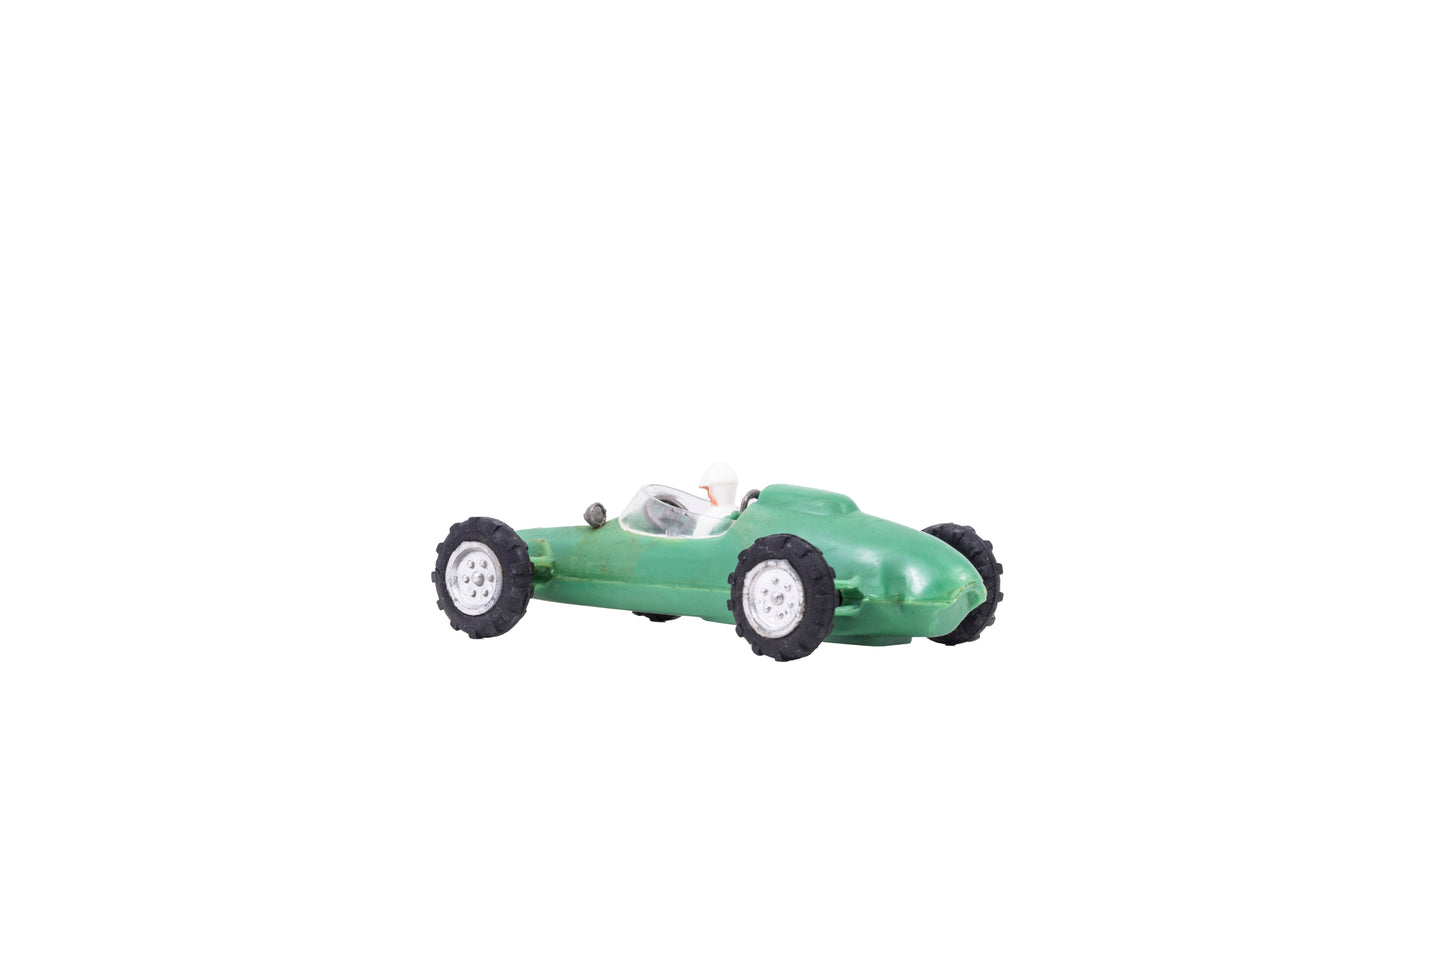 Cooper Formula I Friction Racer Toy from Marx